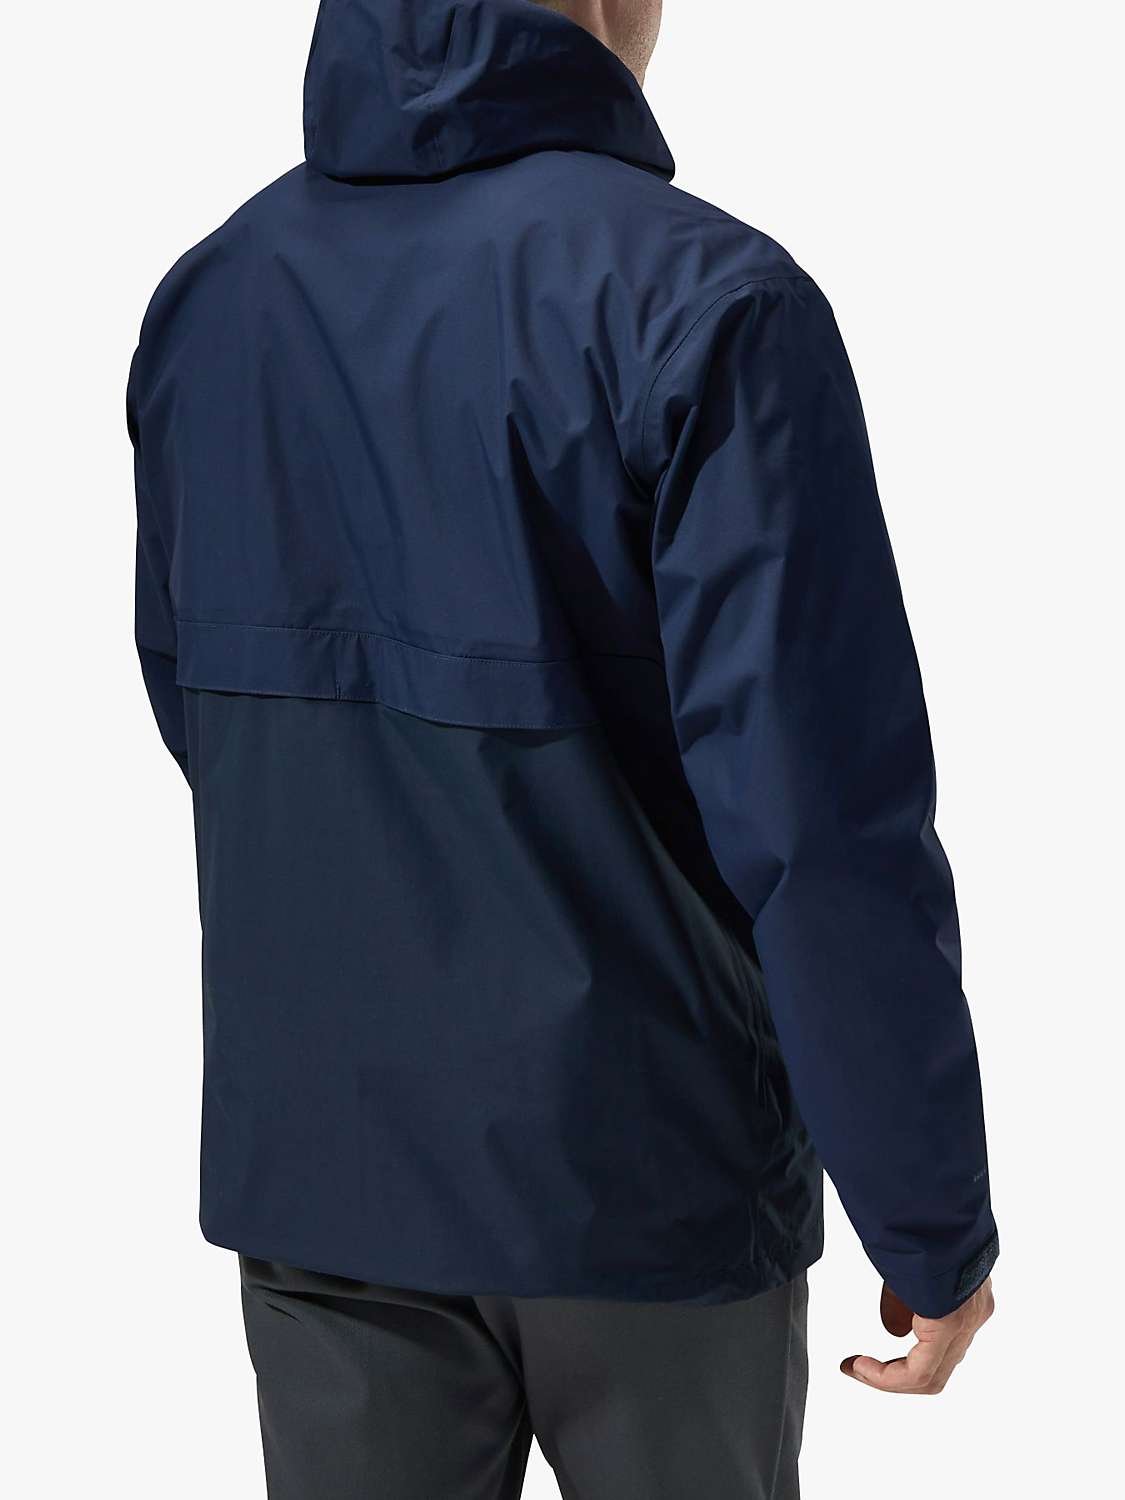 Berghaus Helmor Utility Men's Waterproof Jacket at John Lewis & Partners